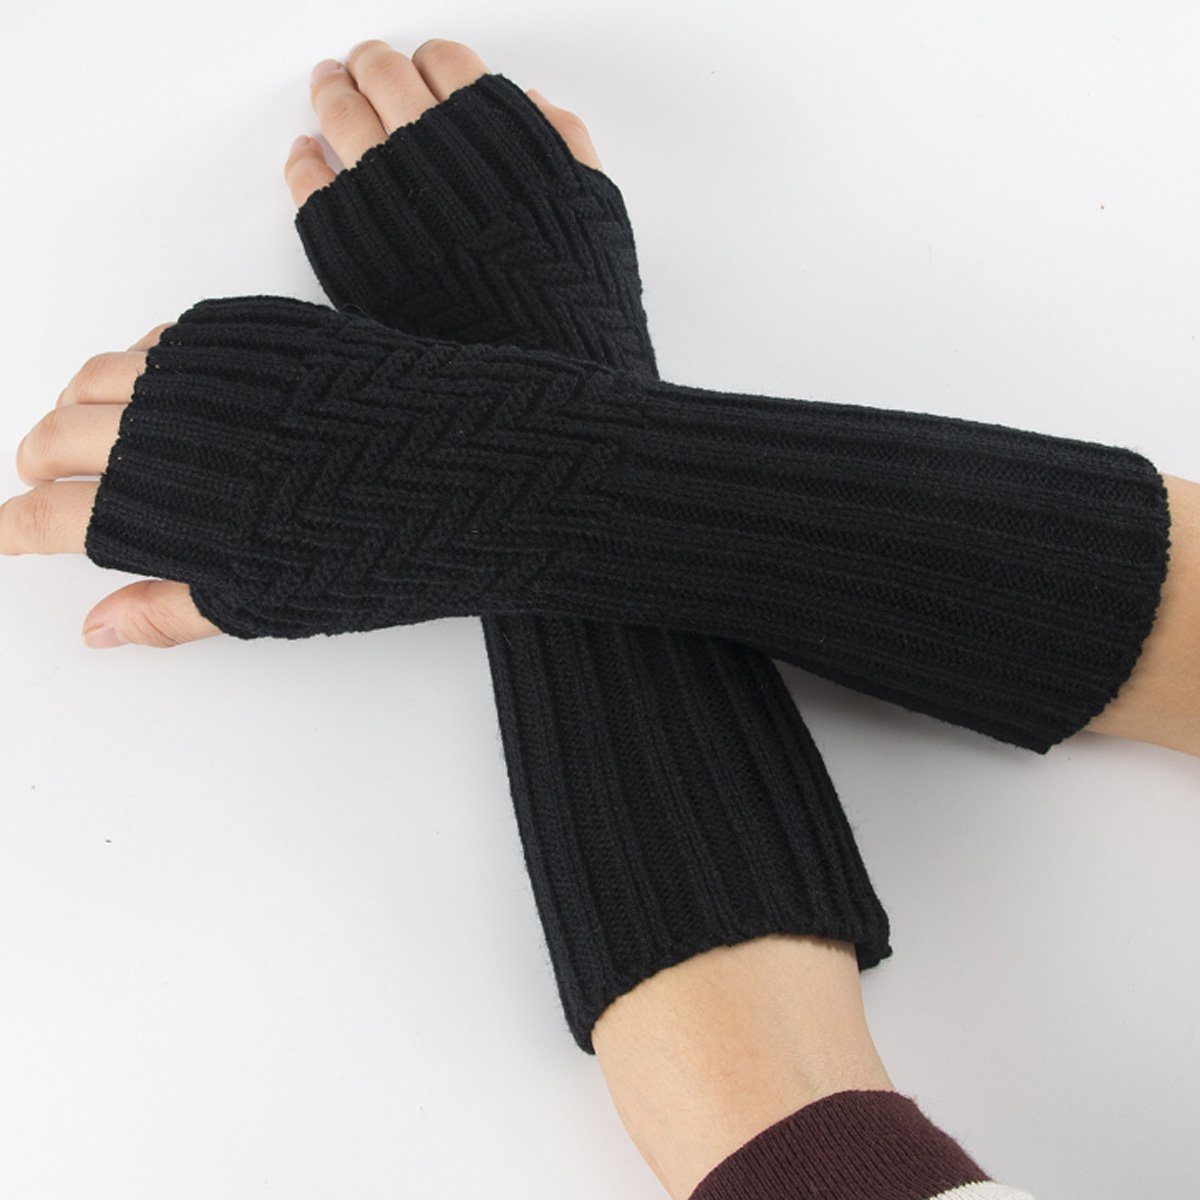 Ärmel,kurze warme Winter Damen Jormftte Strickhandschuhe Fingerlose Schwarz Handschuhe,winter Strick,für